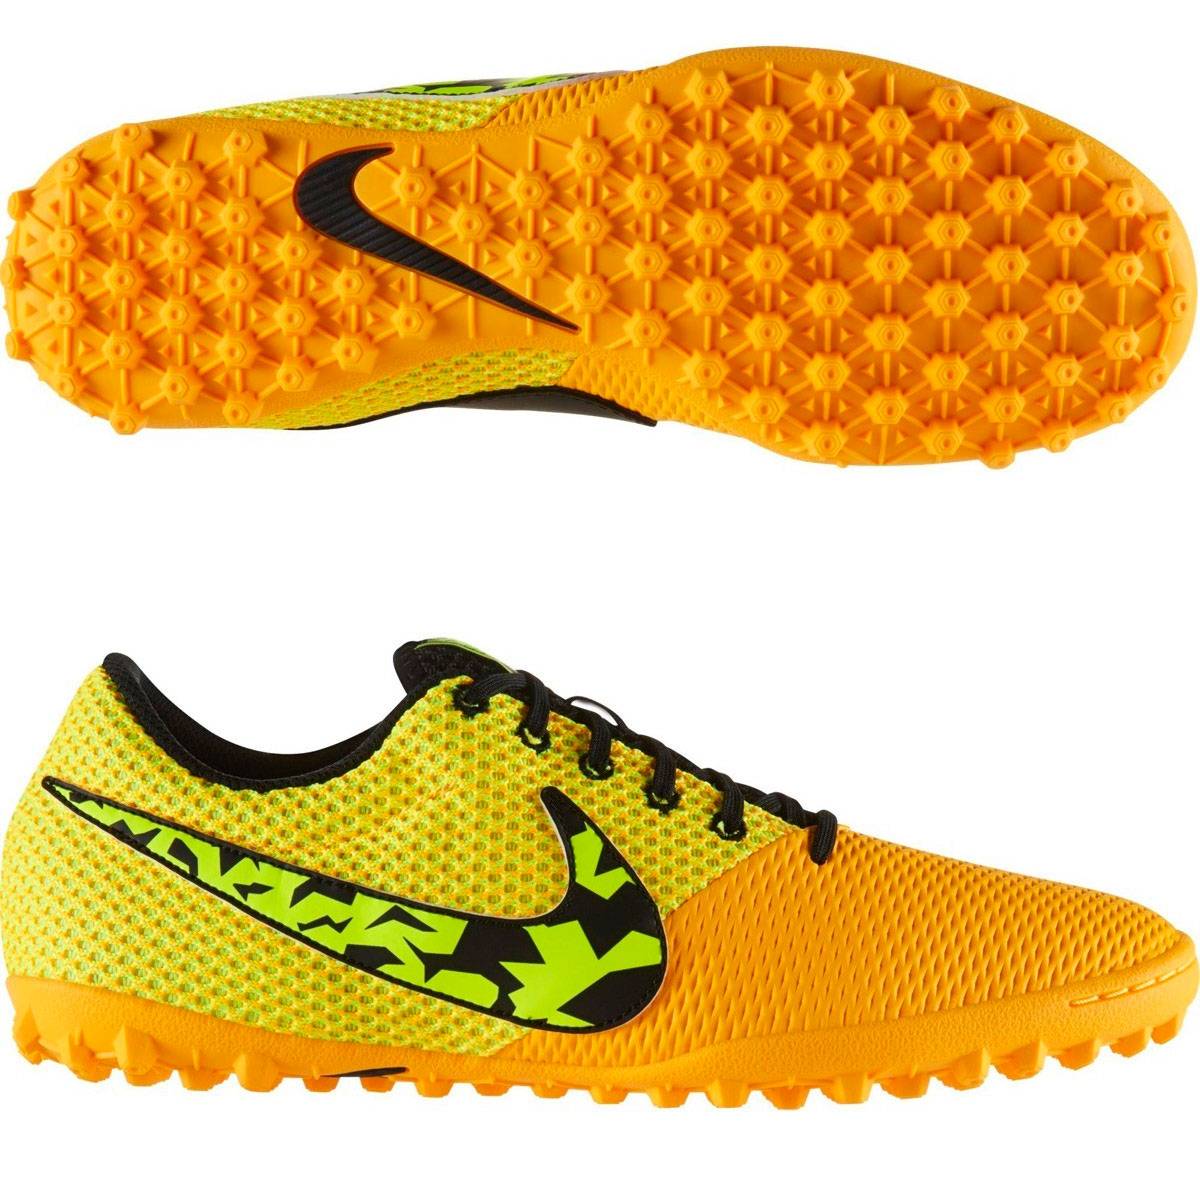 Nike elastico оранжевые